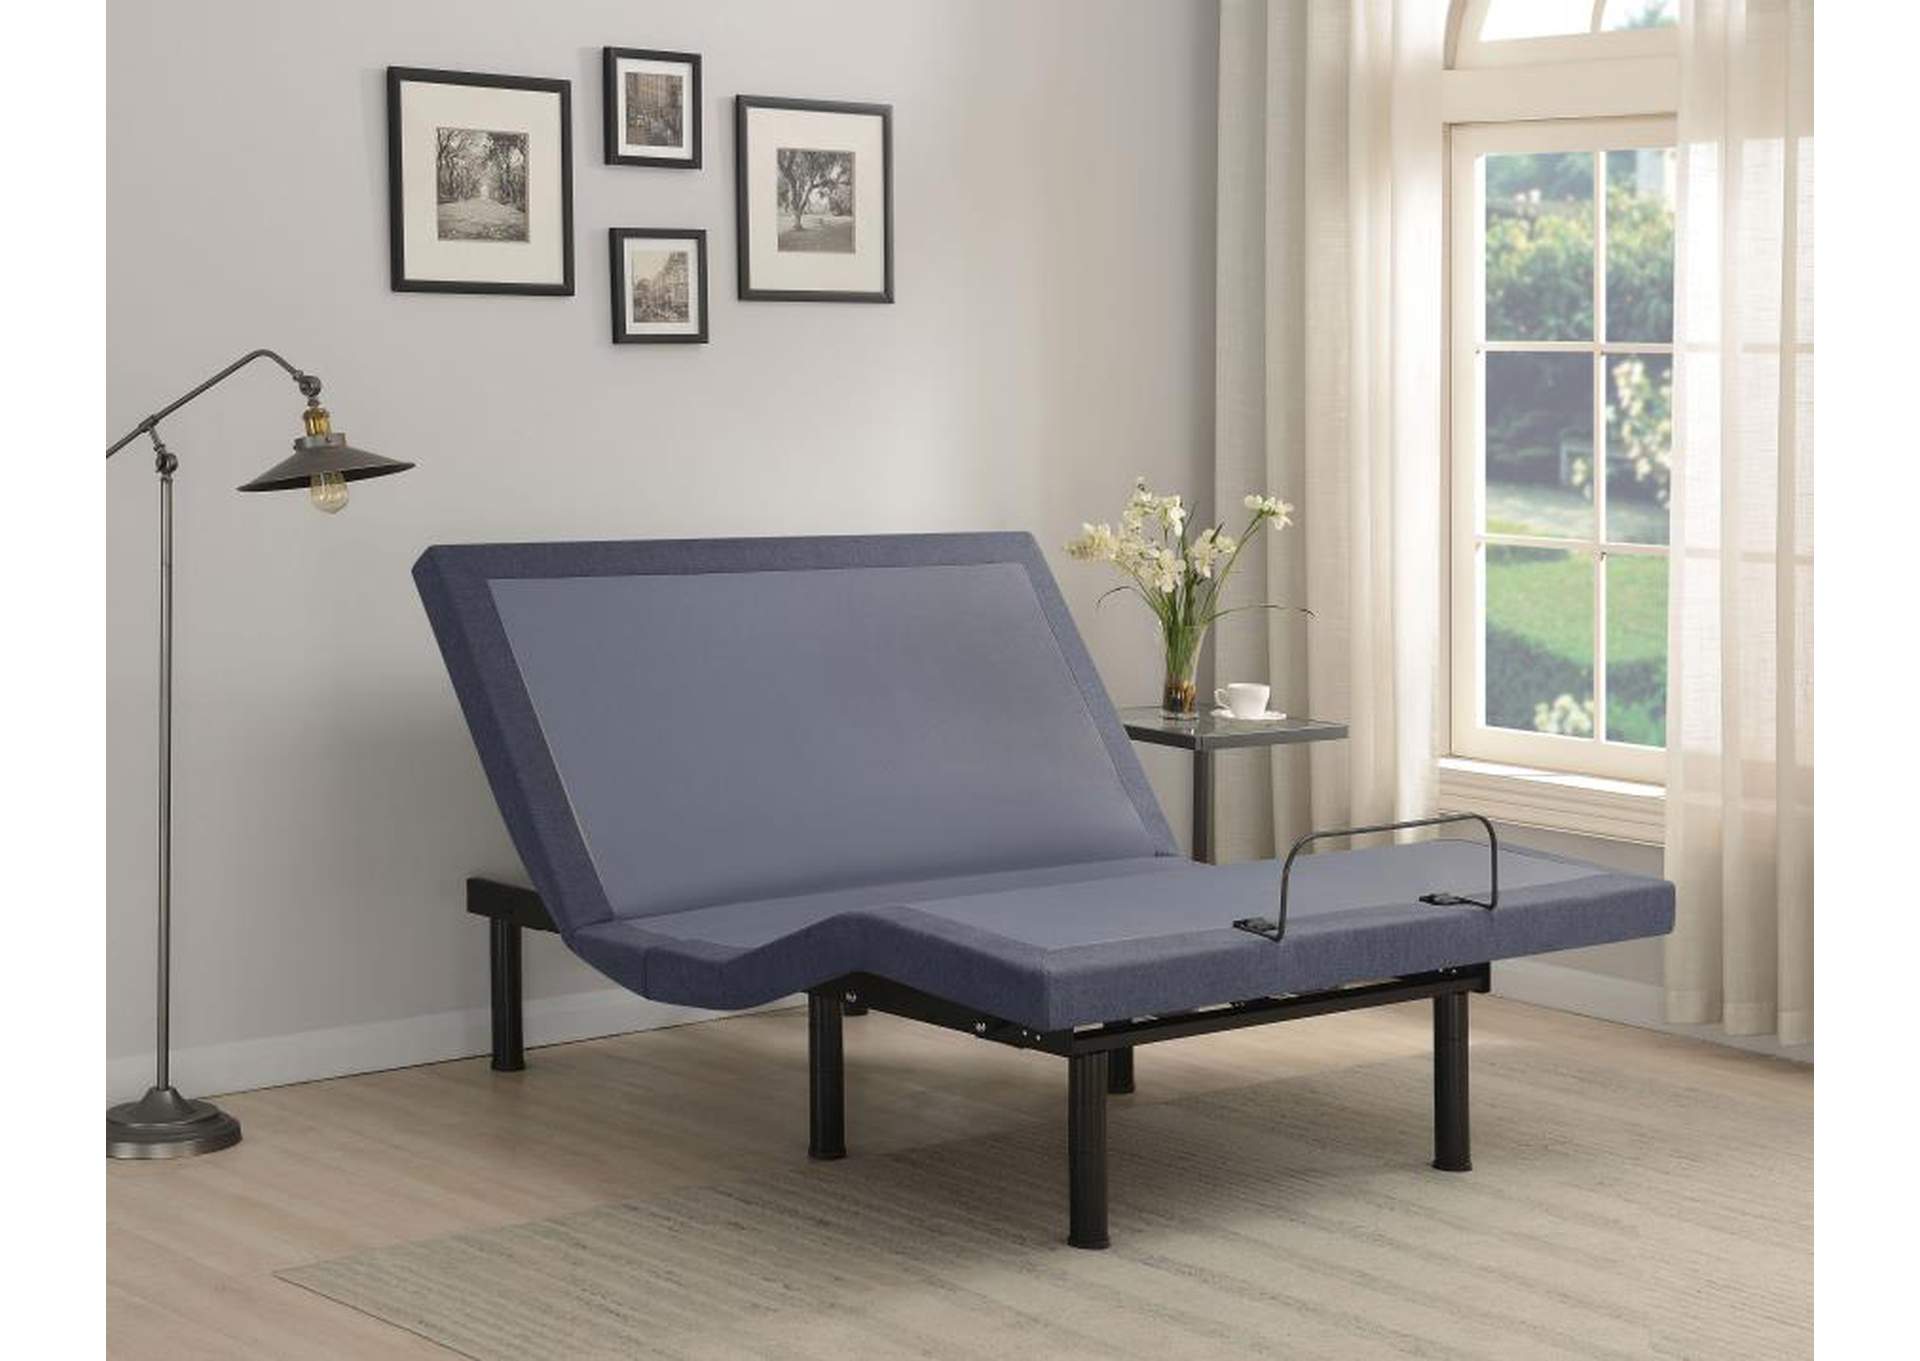 Clara Queen Adjustable Bed Base Grey And Black,Coaster Furniture